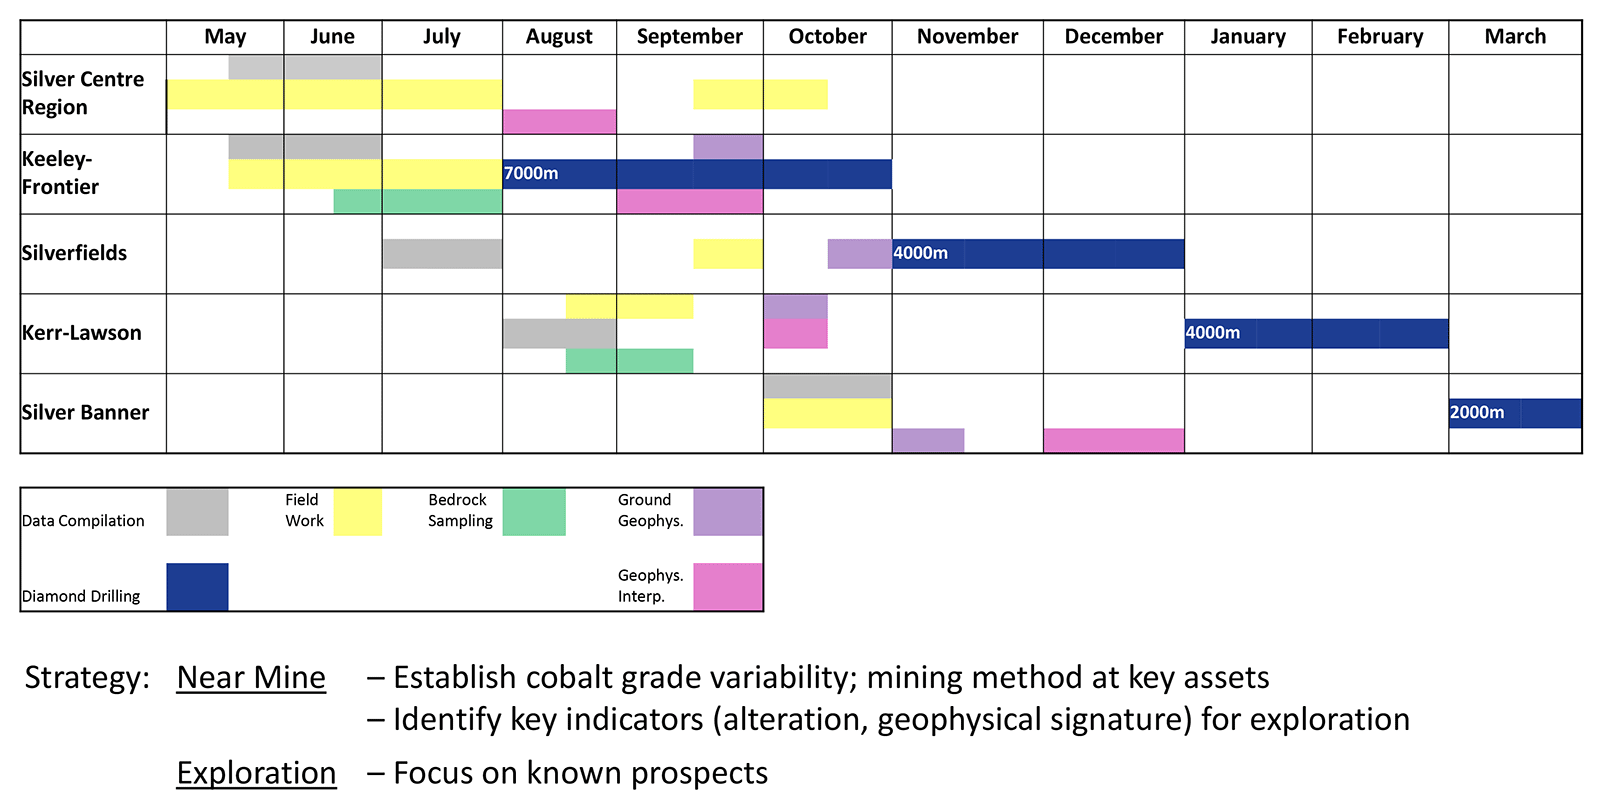 Exploration Schedule 2017-2018